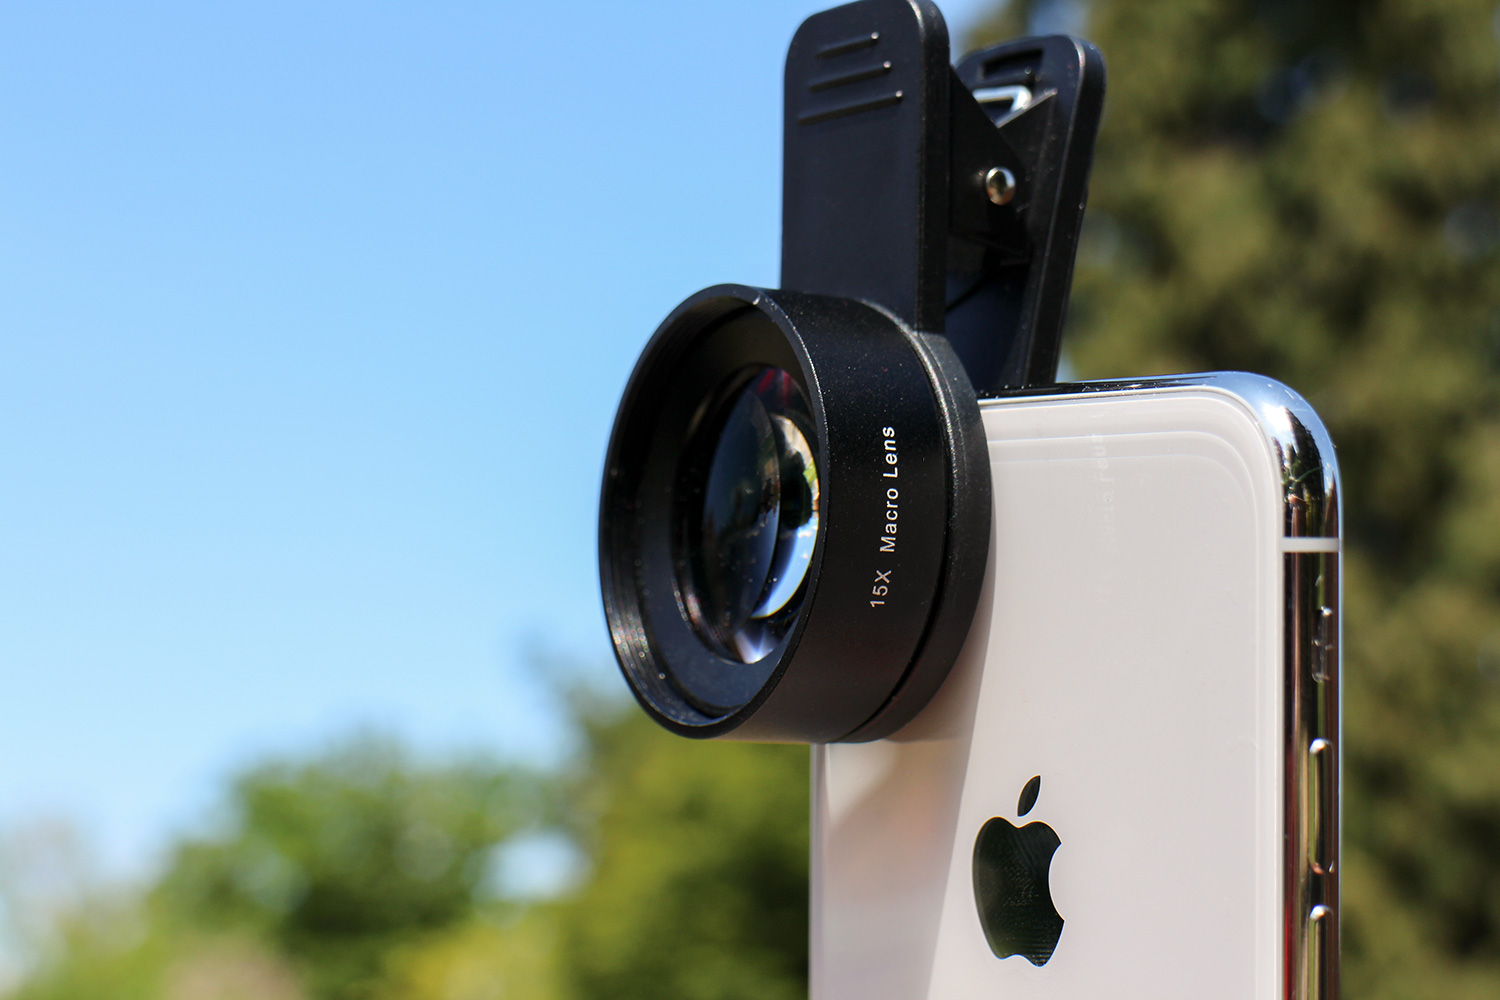 smartphone macro lens camera shootout wd07 3